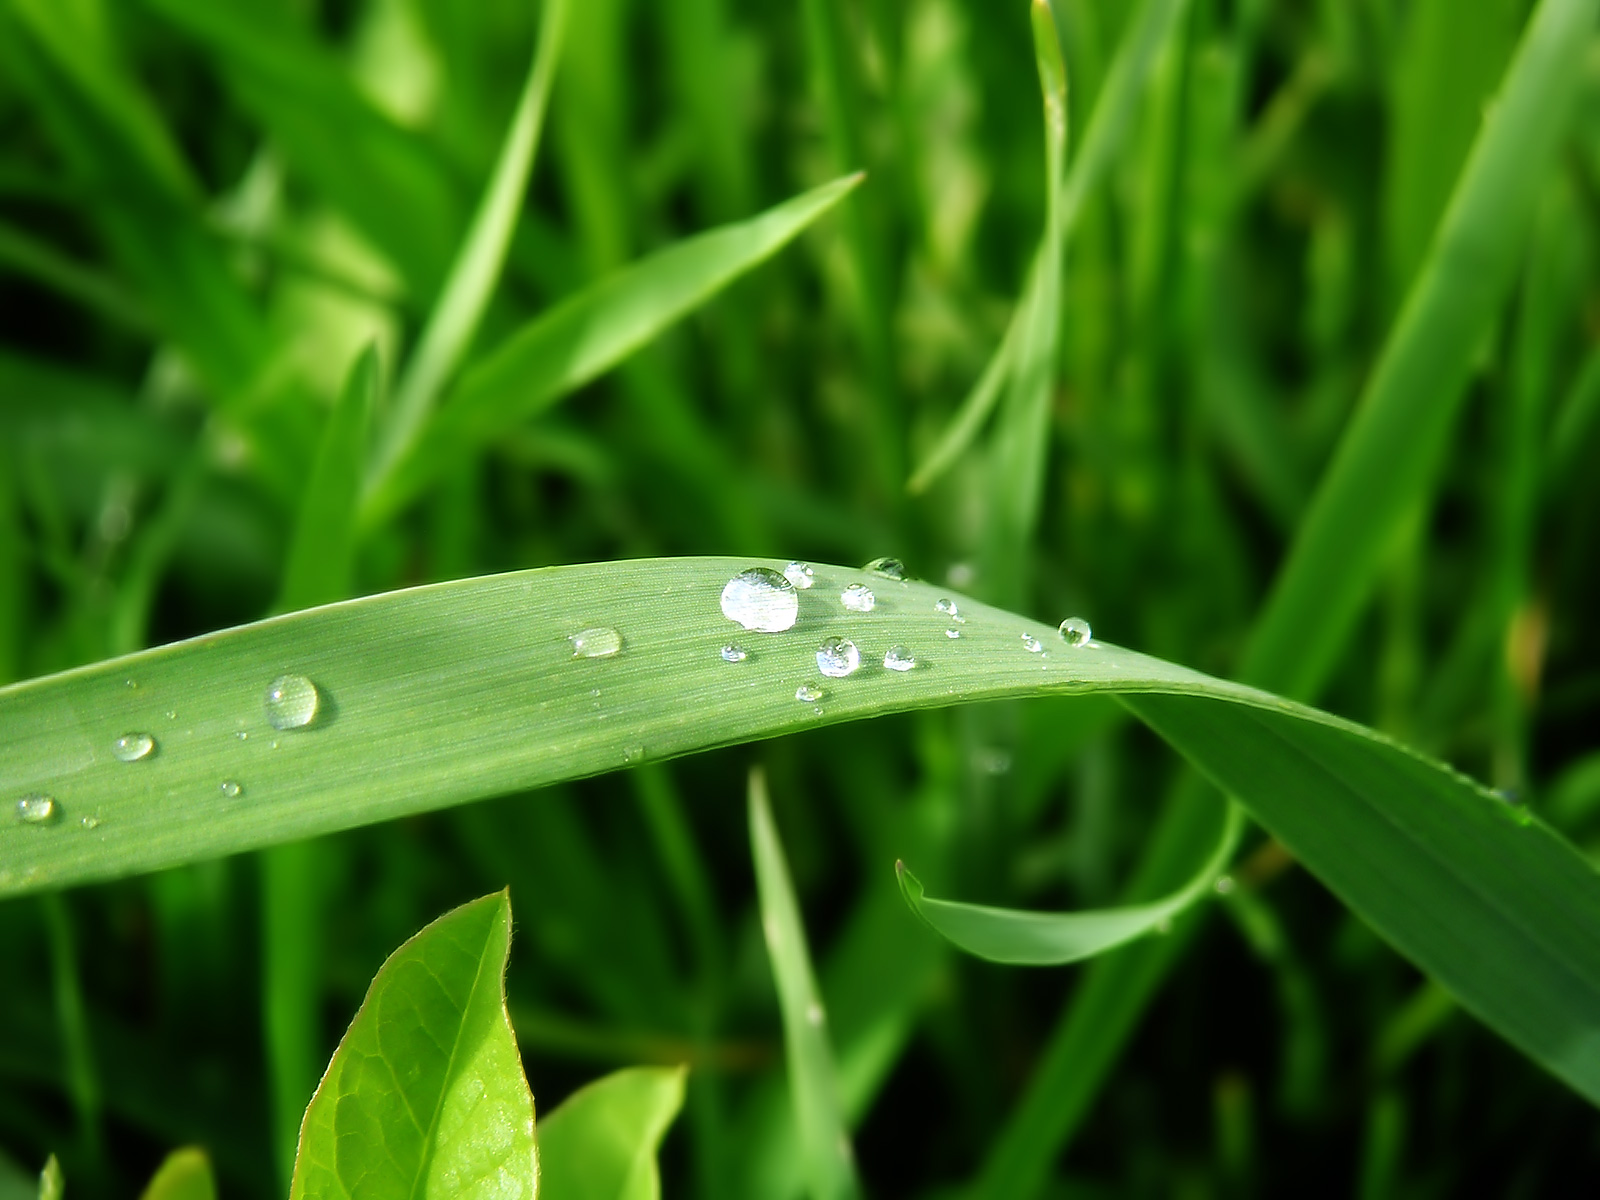 Dew drop on grass close-up